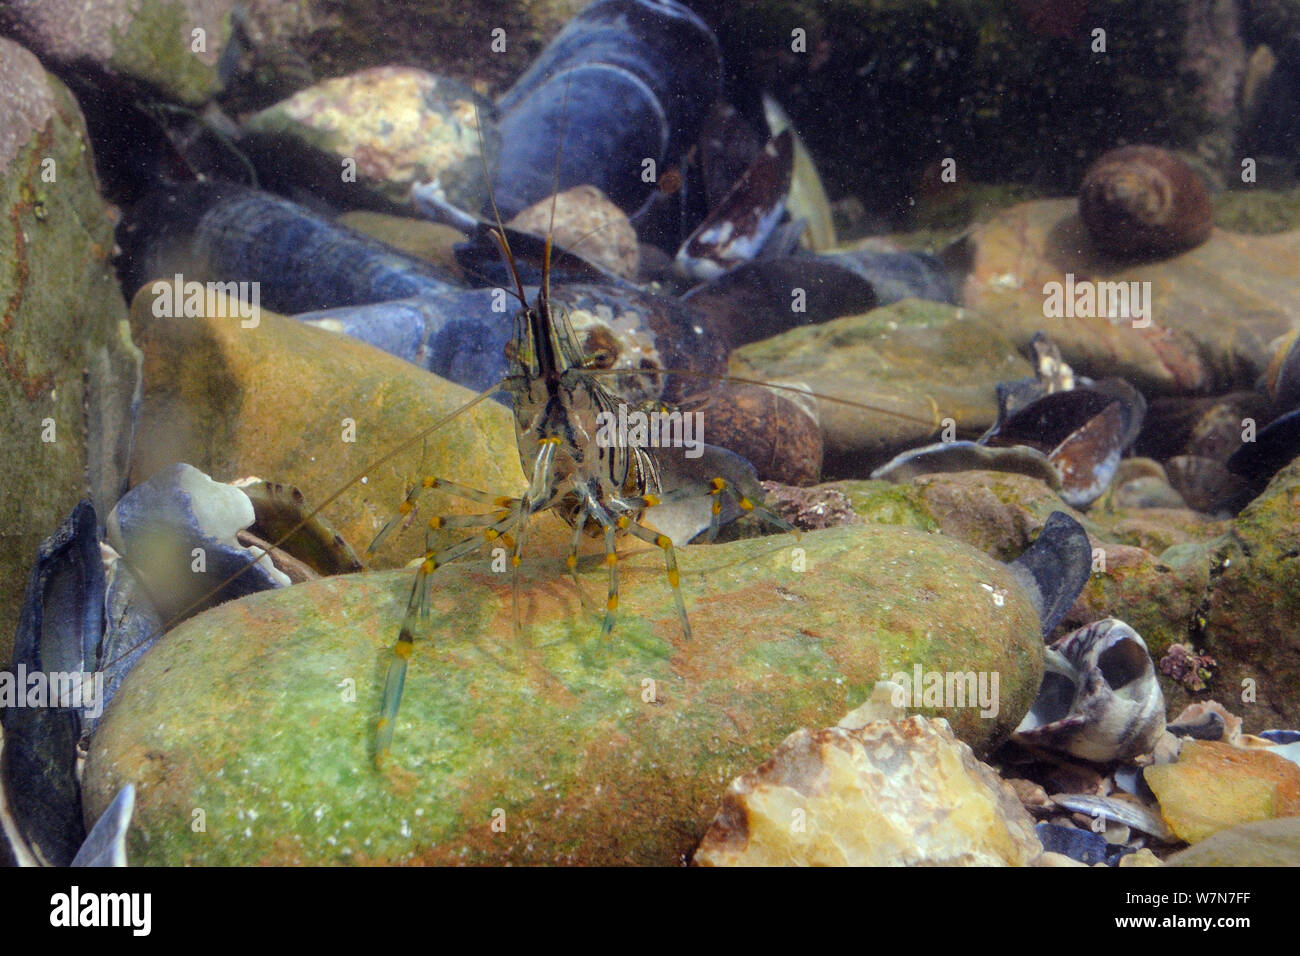 Common prawn (Palaemon serratus) foraging among boulders and shells of Comon periwinkles (Littorina littorea), Rhossili, The Gower Peninsula, UK, July. Stock Photo